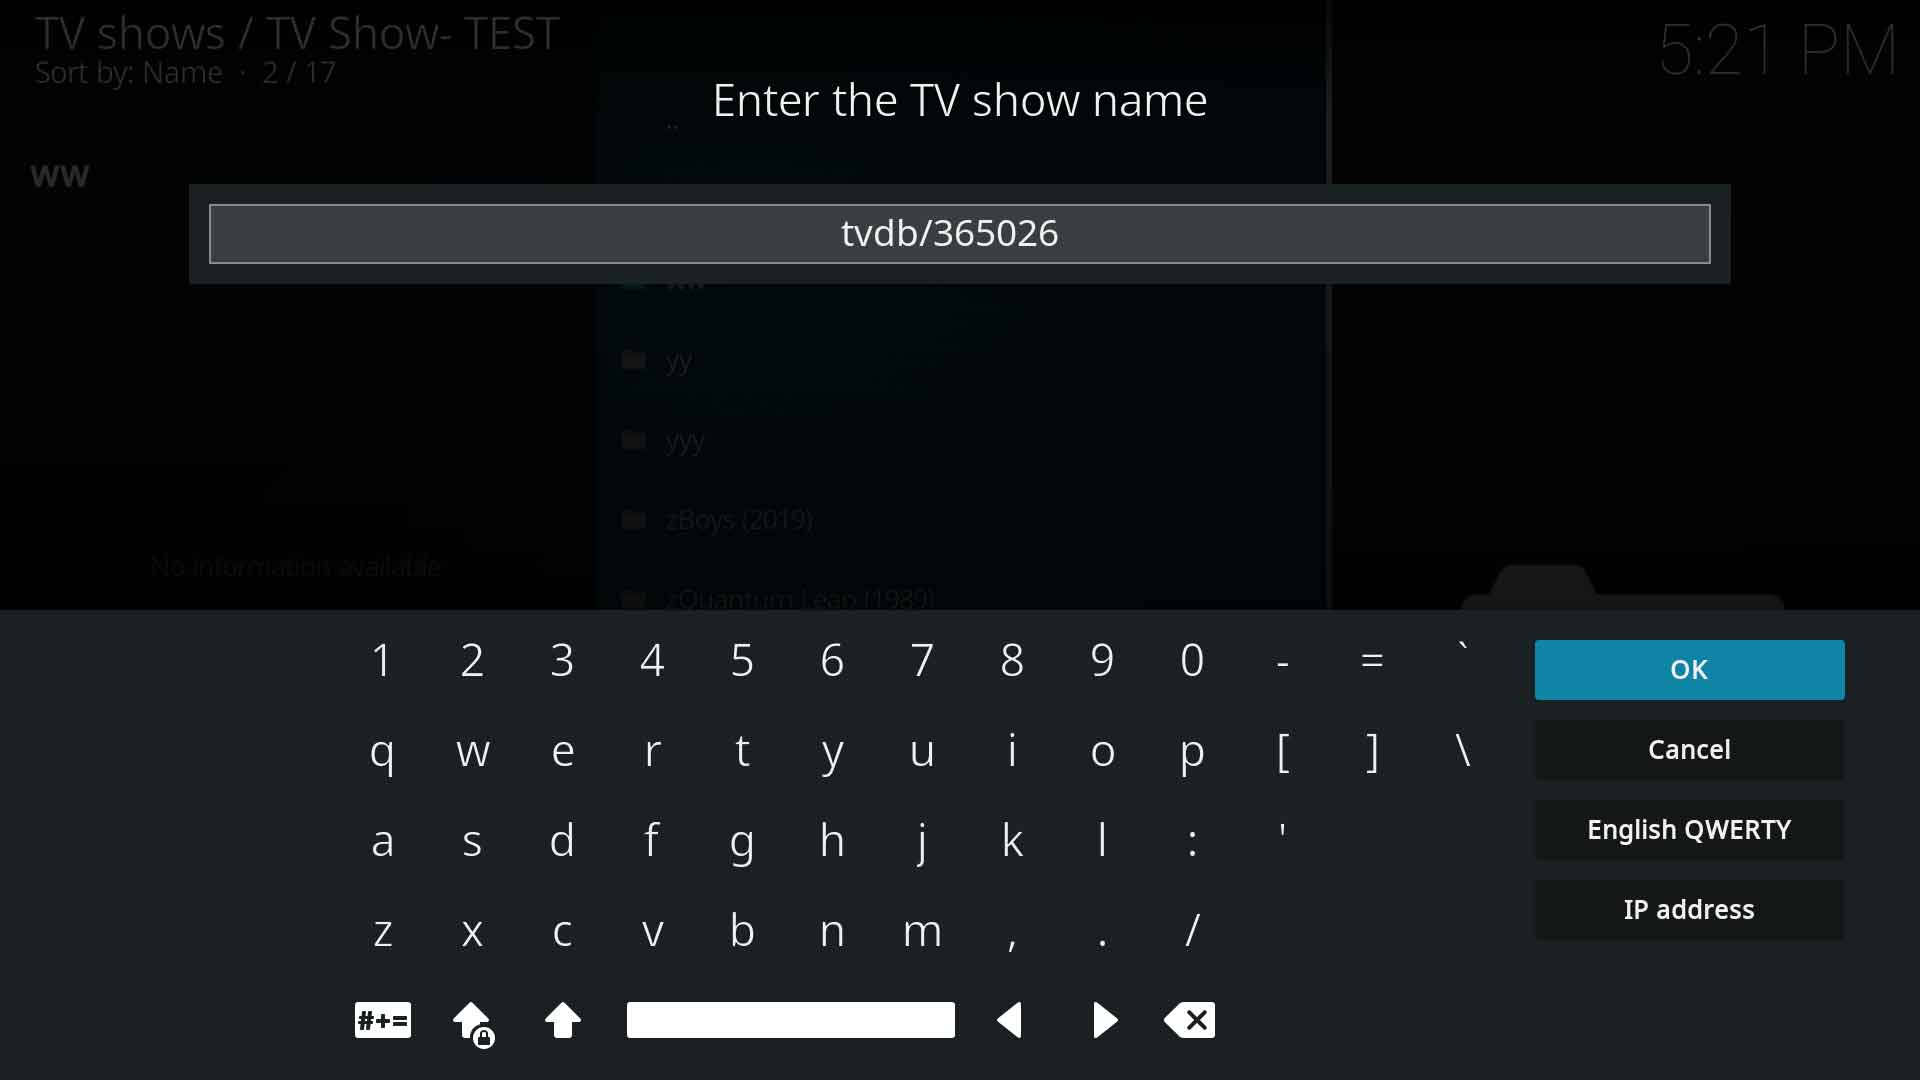 Image 3- If using the TVDB ID, enter it as shown using the tvdb/ prefix